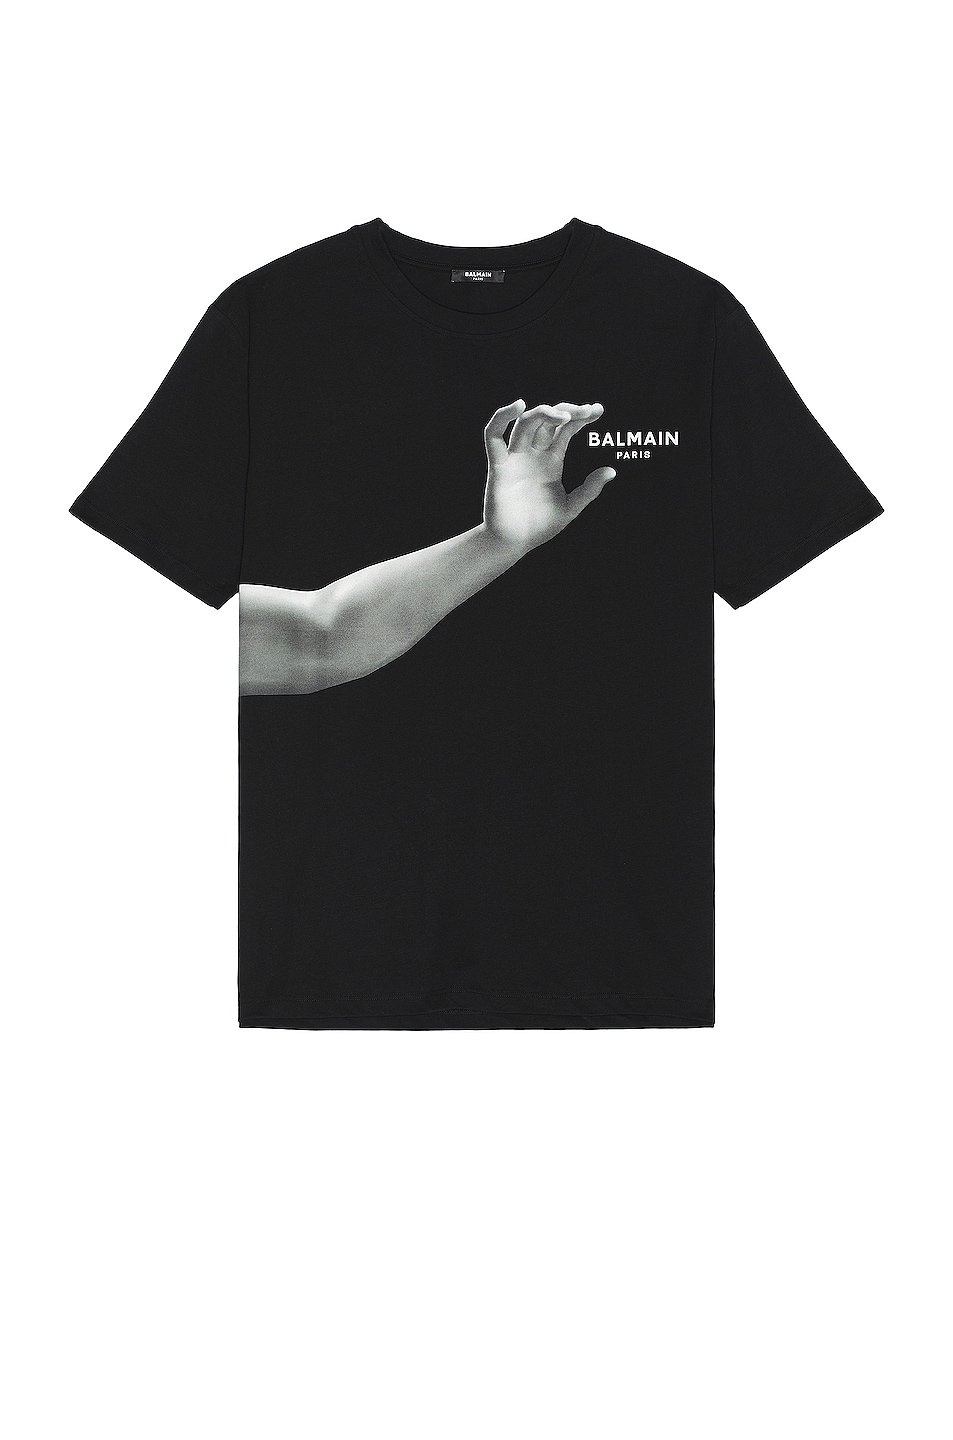 BALMAIN Statue Printed T-Shirt in Noir & Multi Gris | FWRD